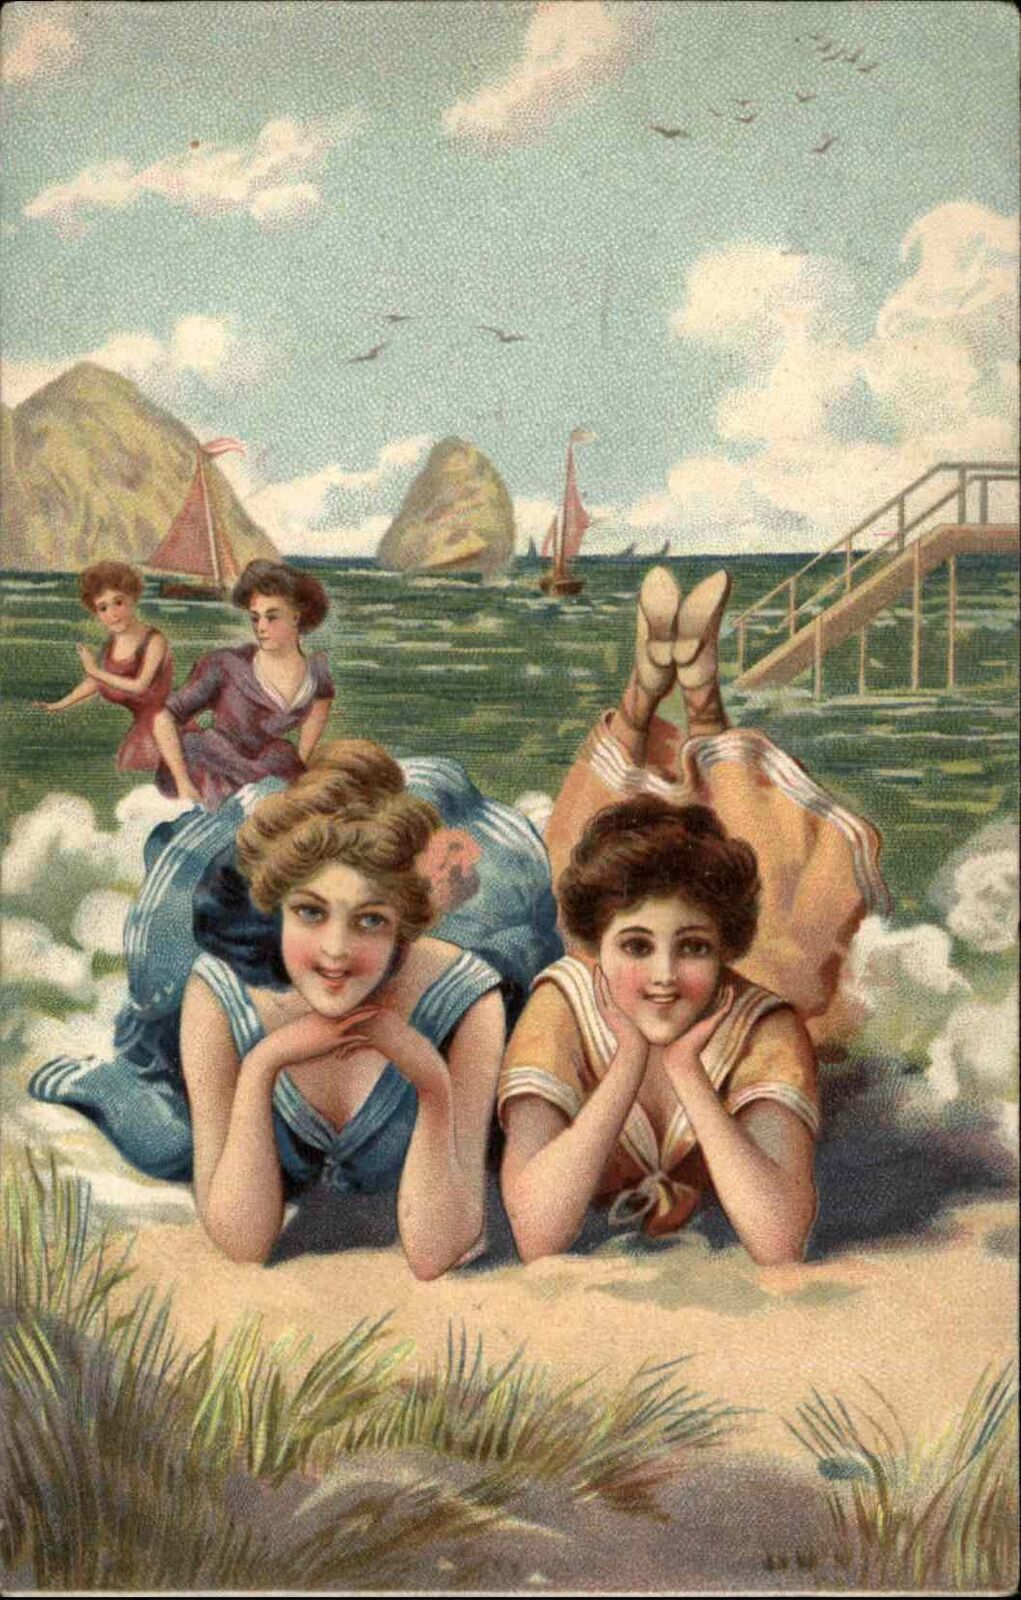 Bathing Beauty Beautiful Women on Beach Waves c1910 Vintage Postcard